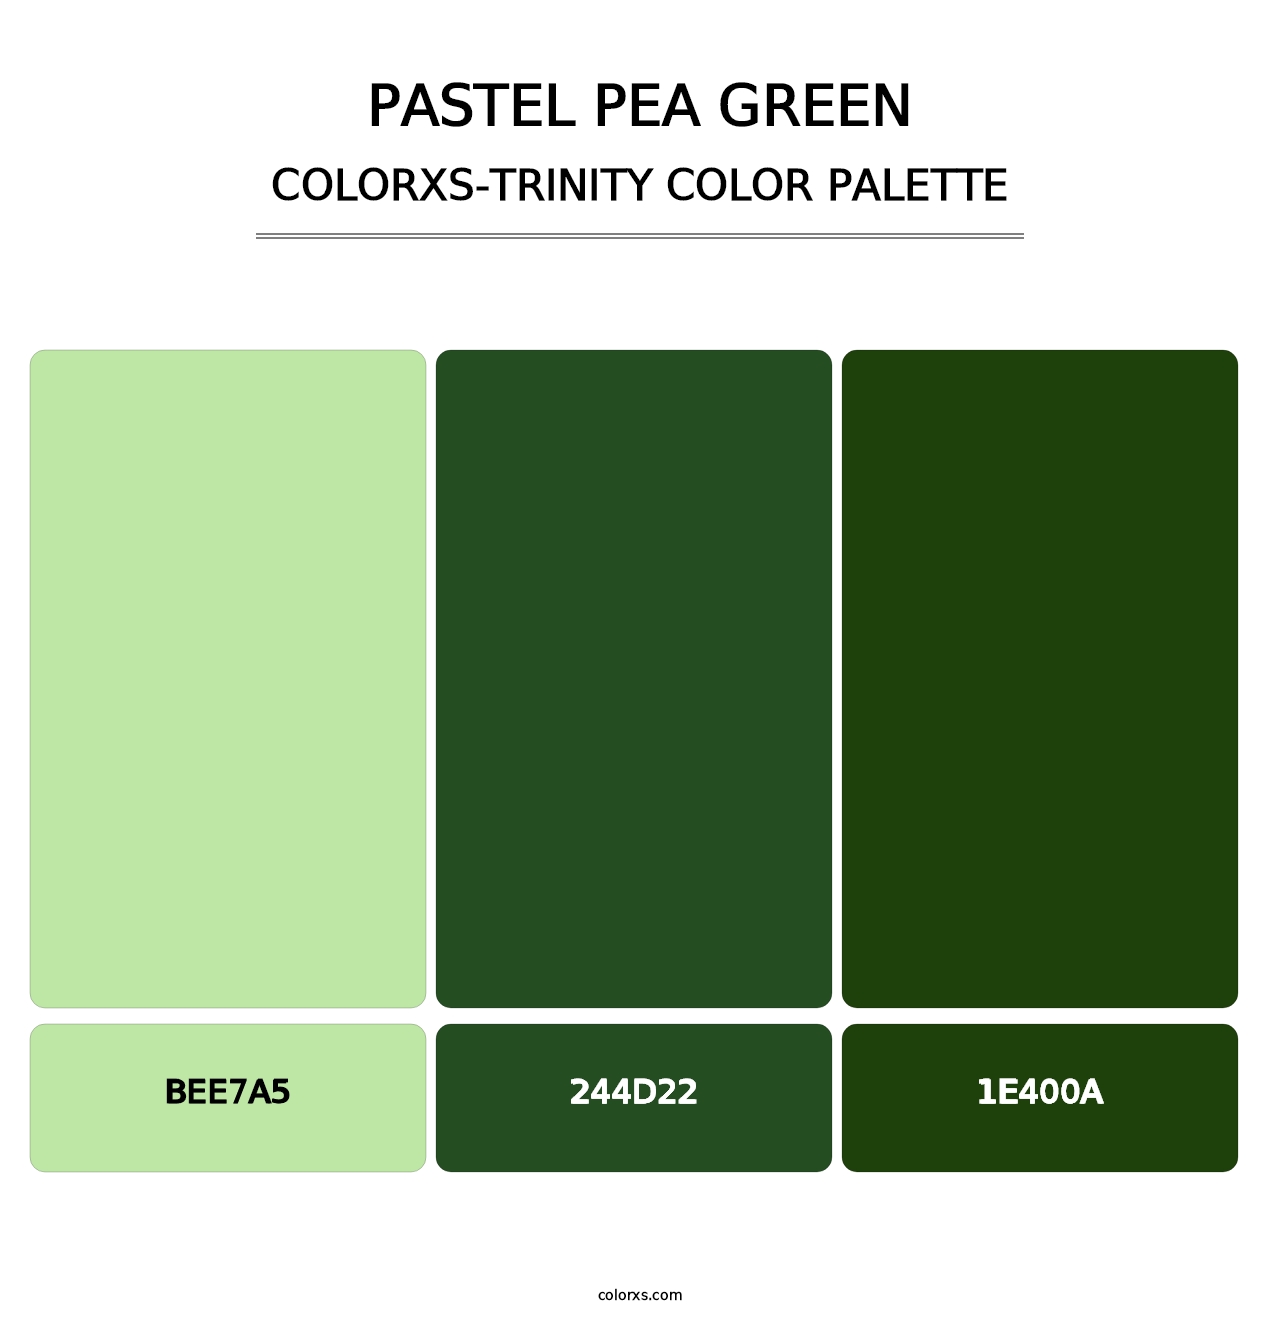 Pastel Pea Green - Colorxs Trinity Palette